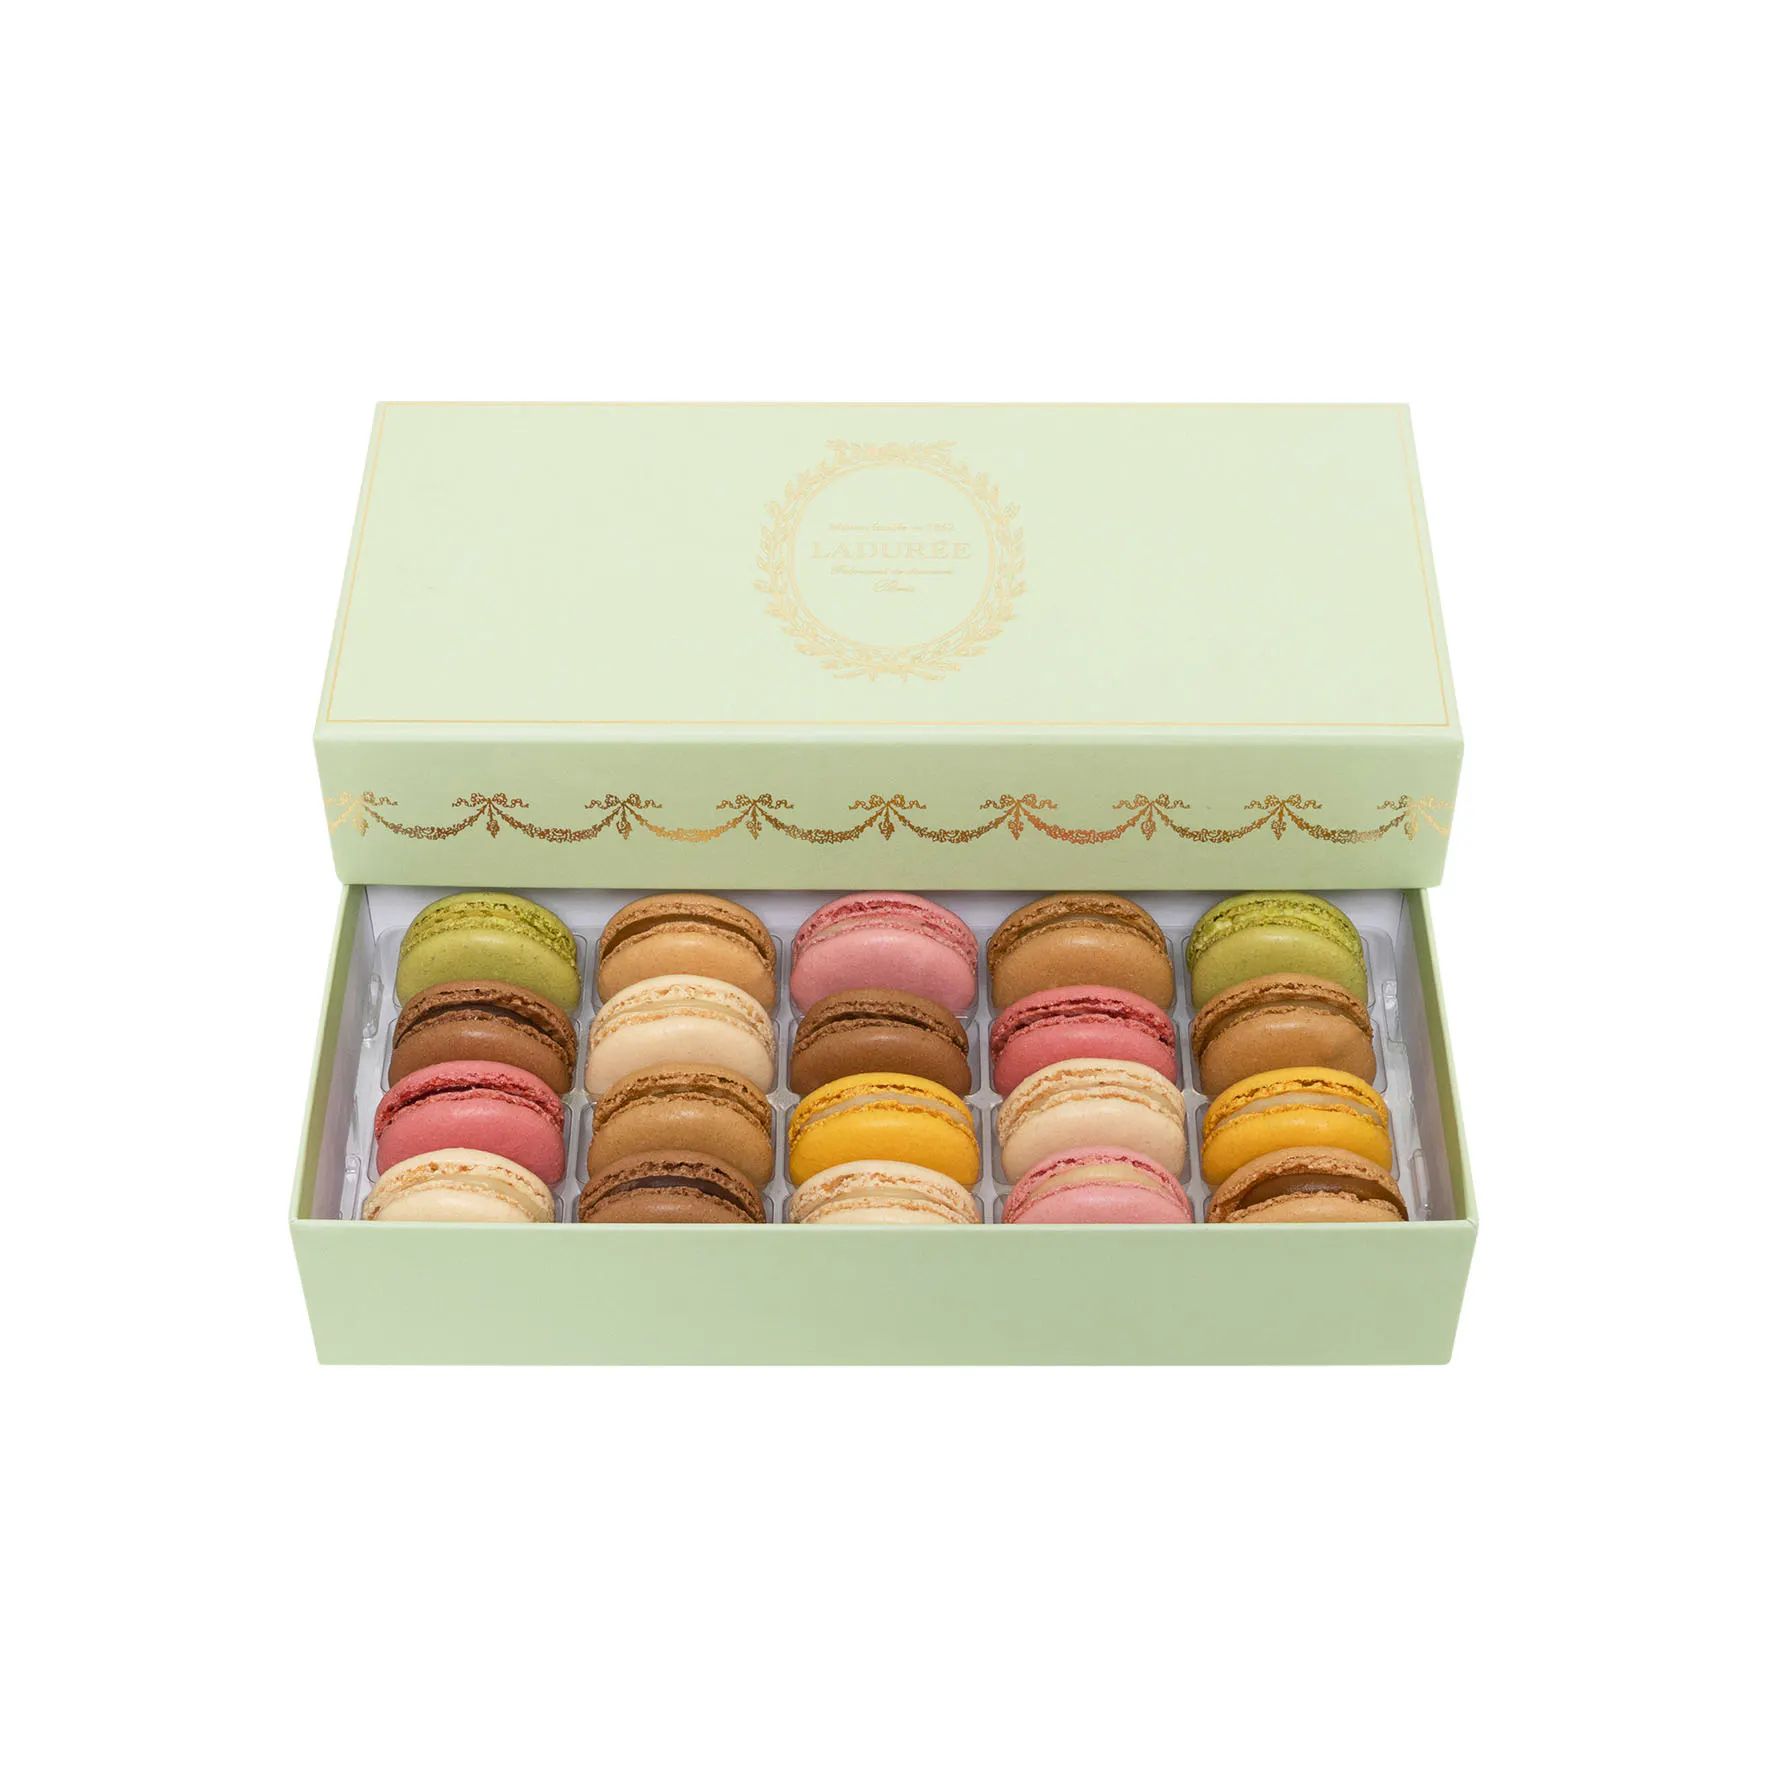 Prestige Green - Box of 20 Macarons by Ladurée Paris | Goldbelly | Goldbelly